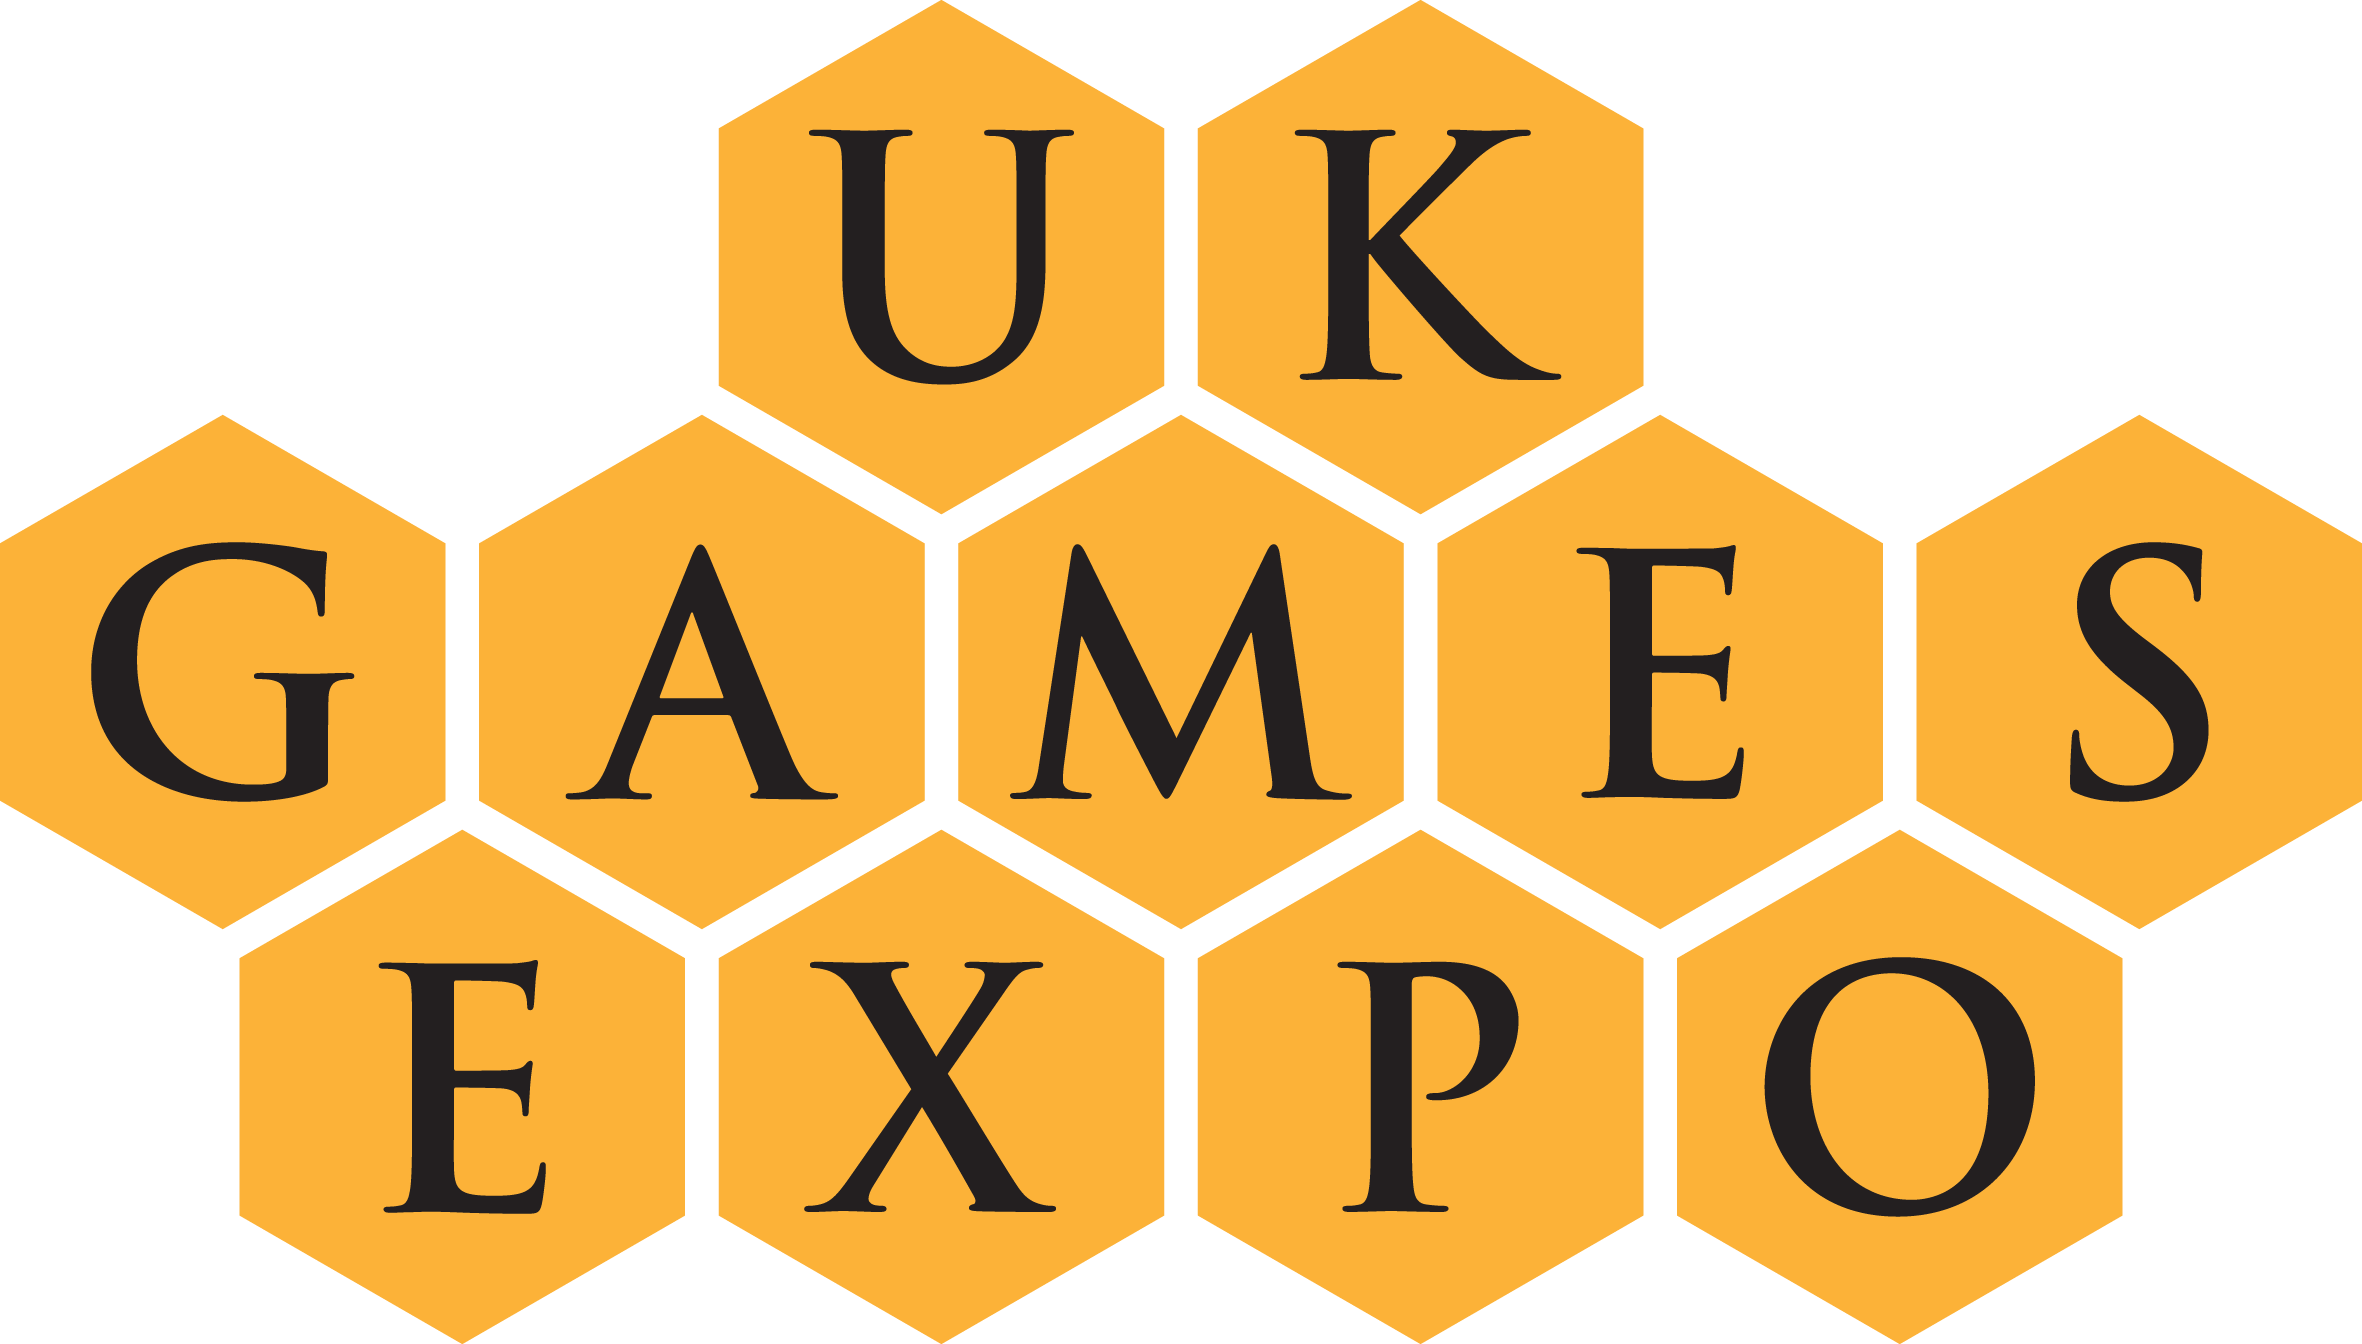 Hobbygames логотип. Uk games Expo \. Expo буквы. Forex Expo Awards логотип. Games uk